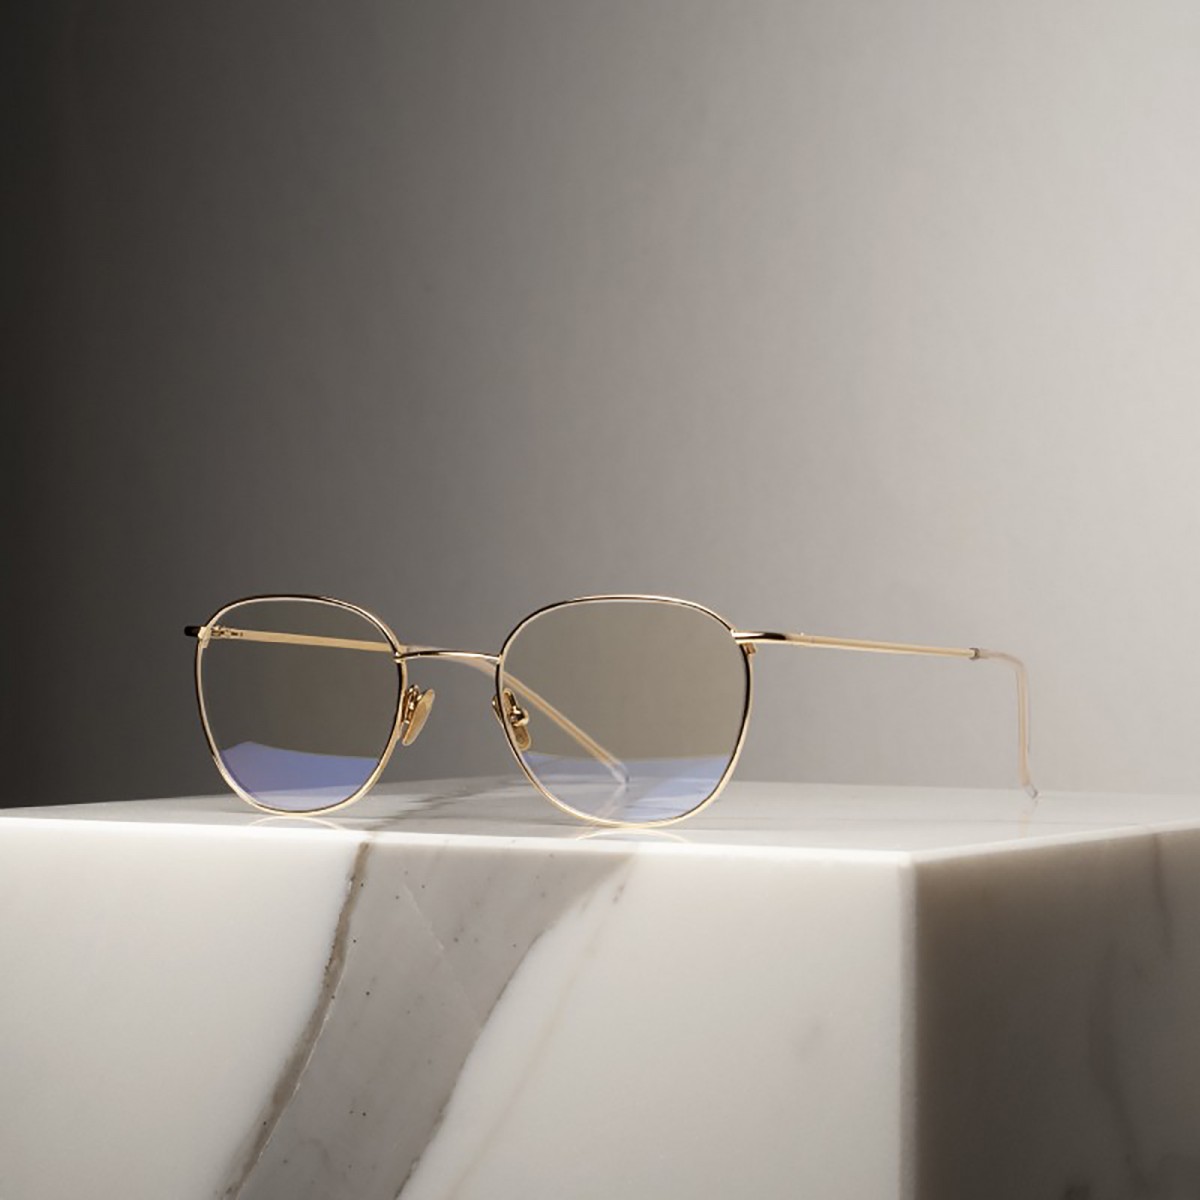 0097 - Metal glasses handmade in France